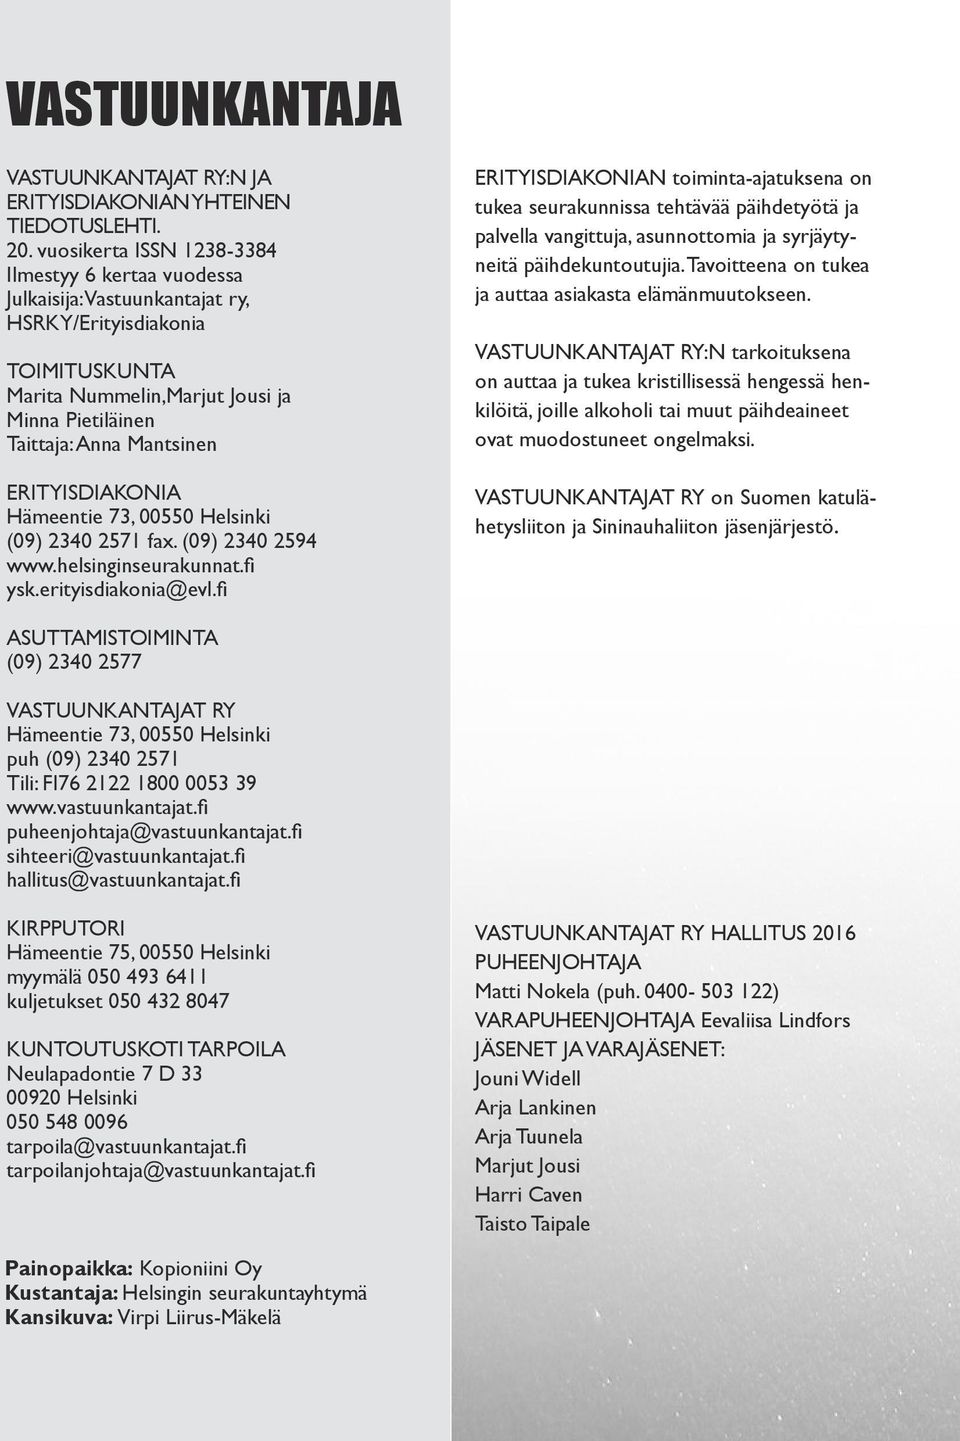 Erityisdiakonia Hämeentie 73, 00550 Helsinki (09) 2340 2571 fax. (09) 2340 2594 www.helsinginseurakunnat.fi ysk.erityisdiakonia@evl.